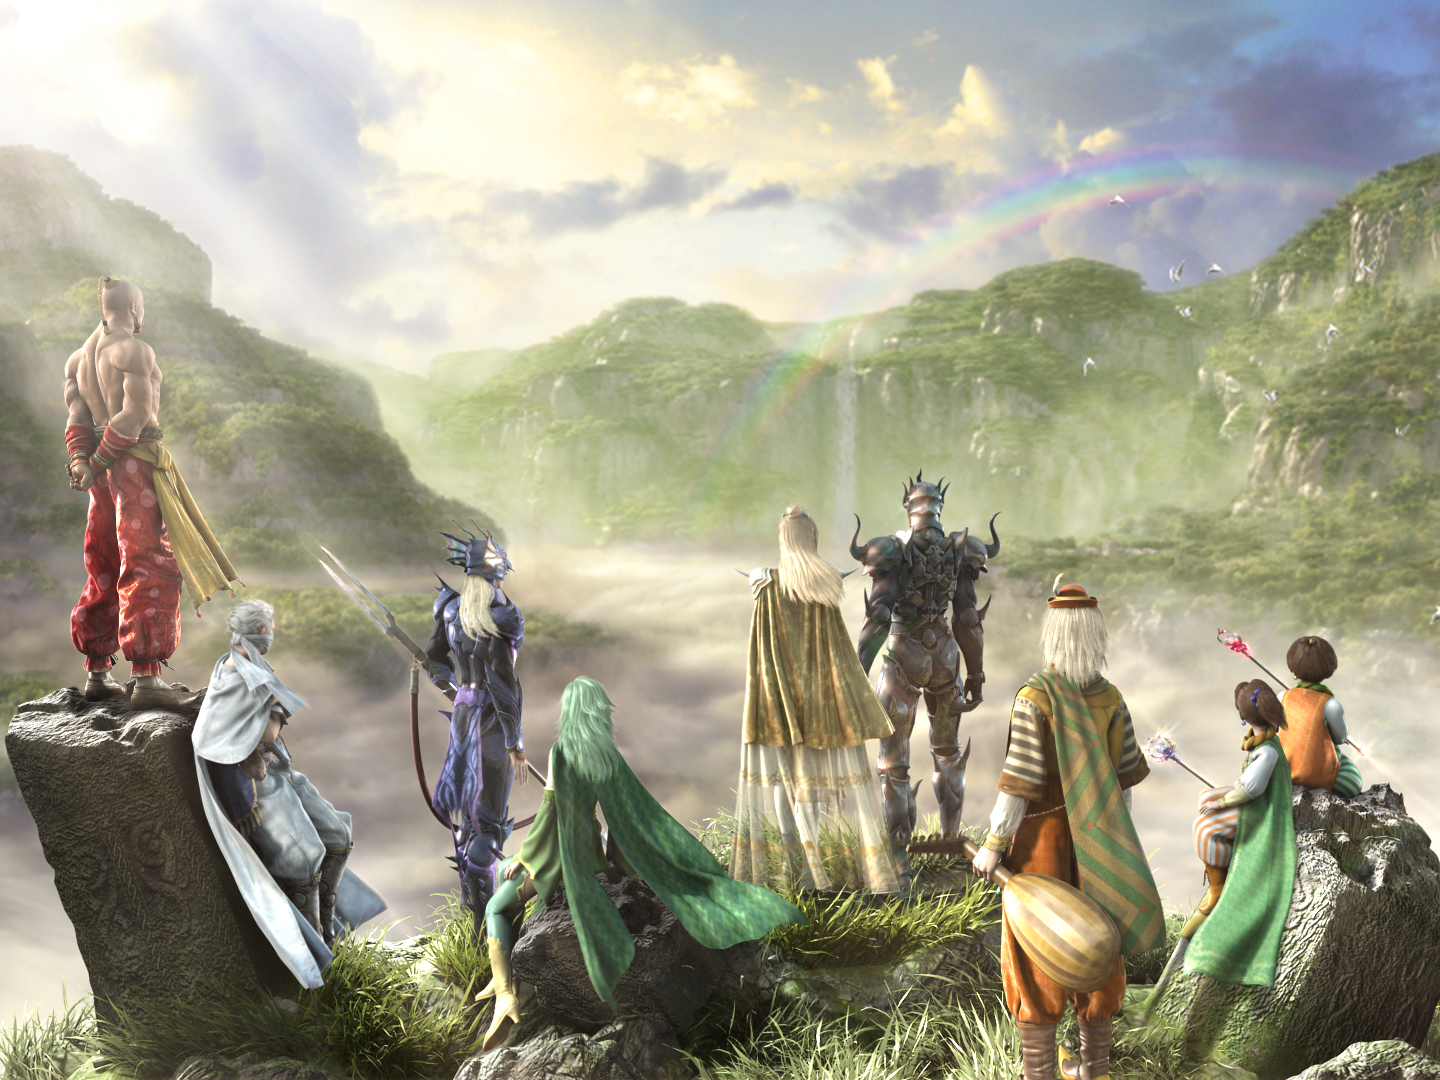 Final Fantasy (video game) - Wikipedia